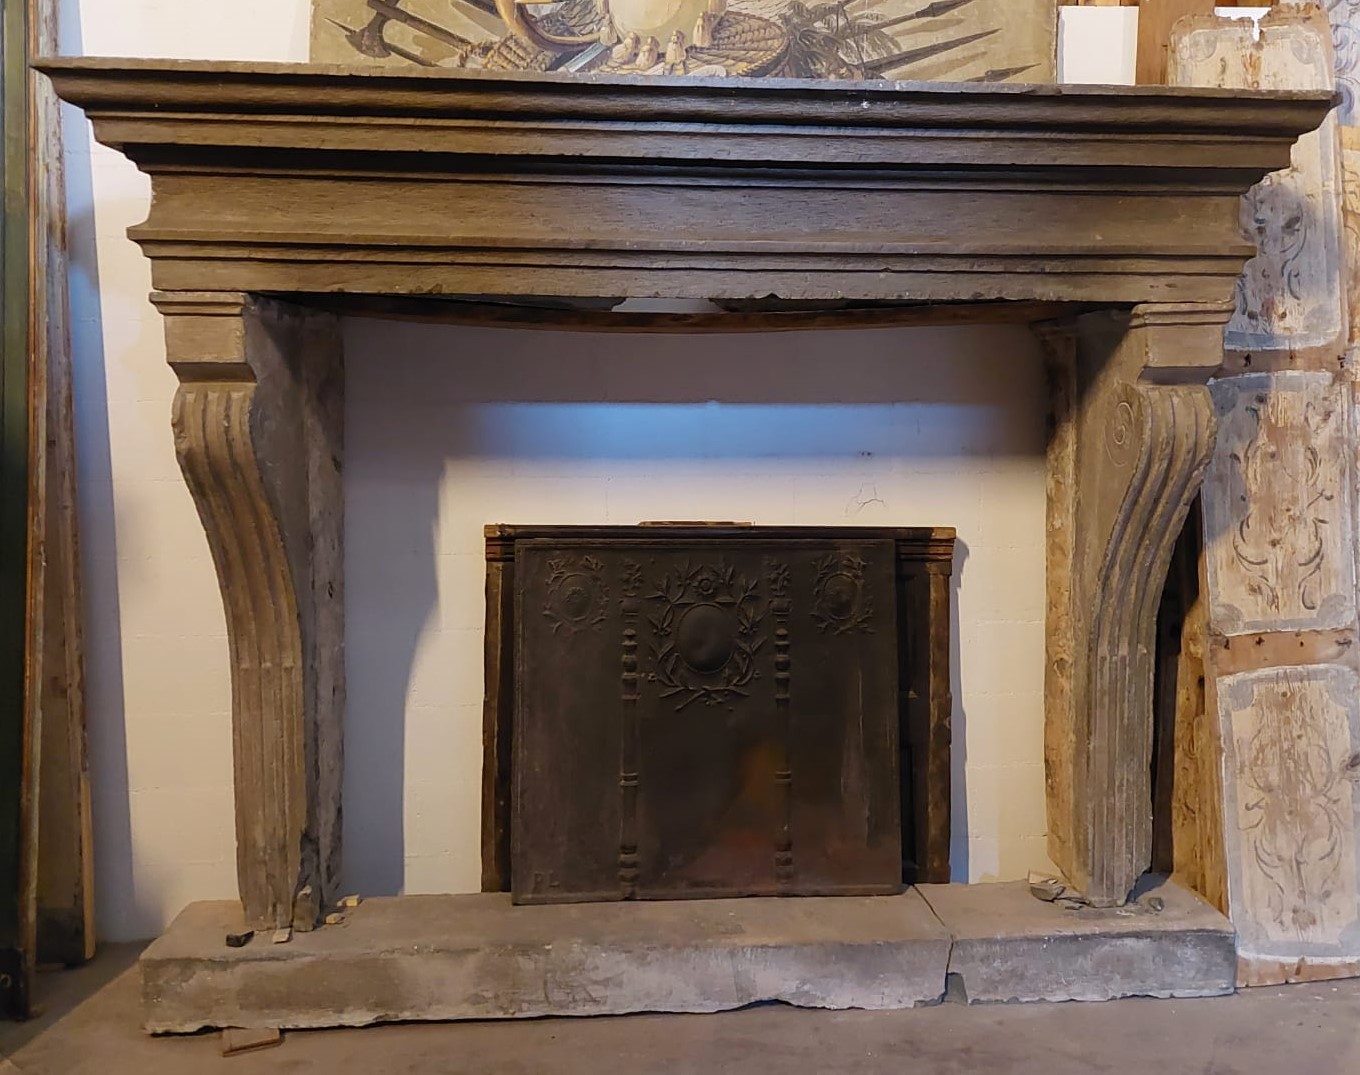 chp339 - monumental stone fireplace, 17th century, max size cm w 250 x h 201